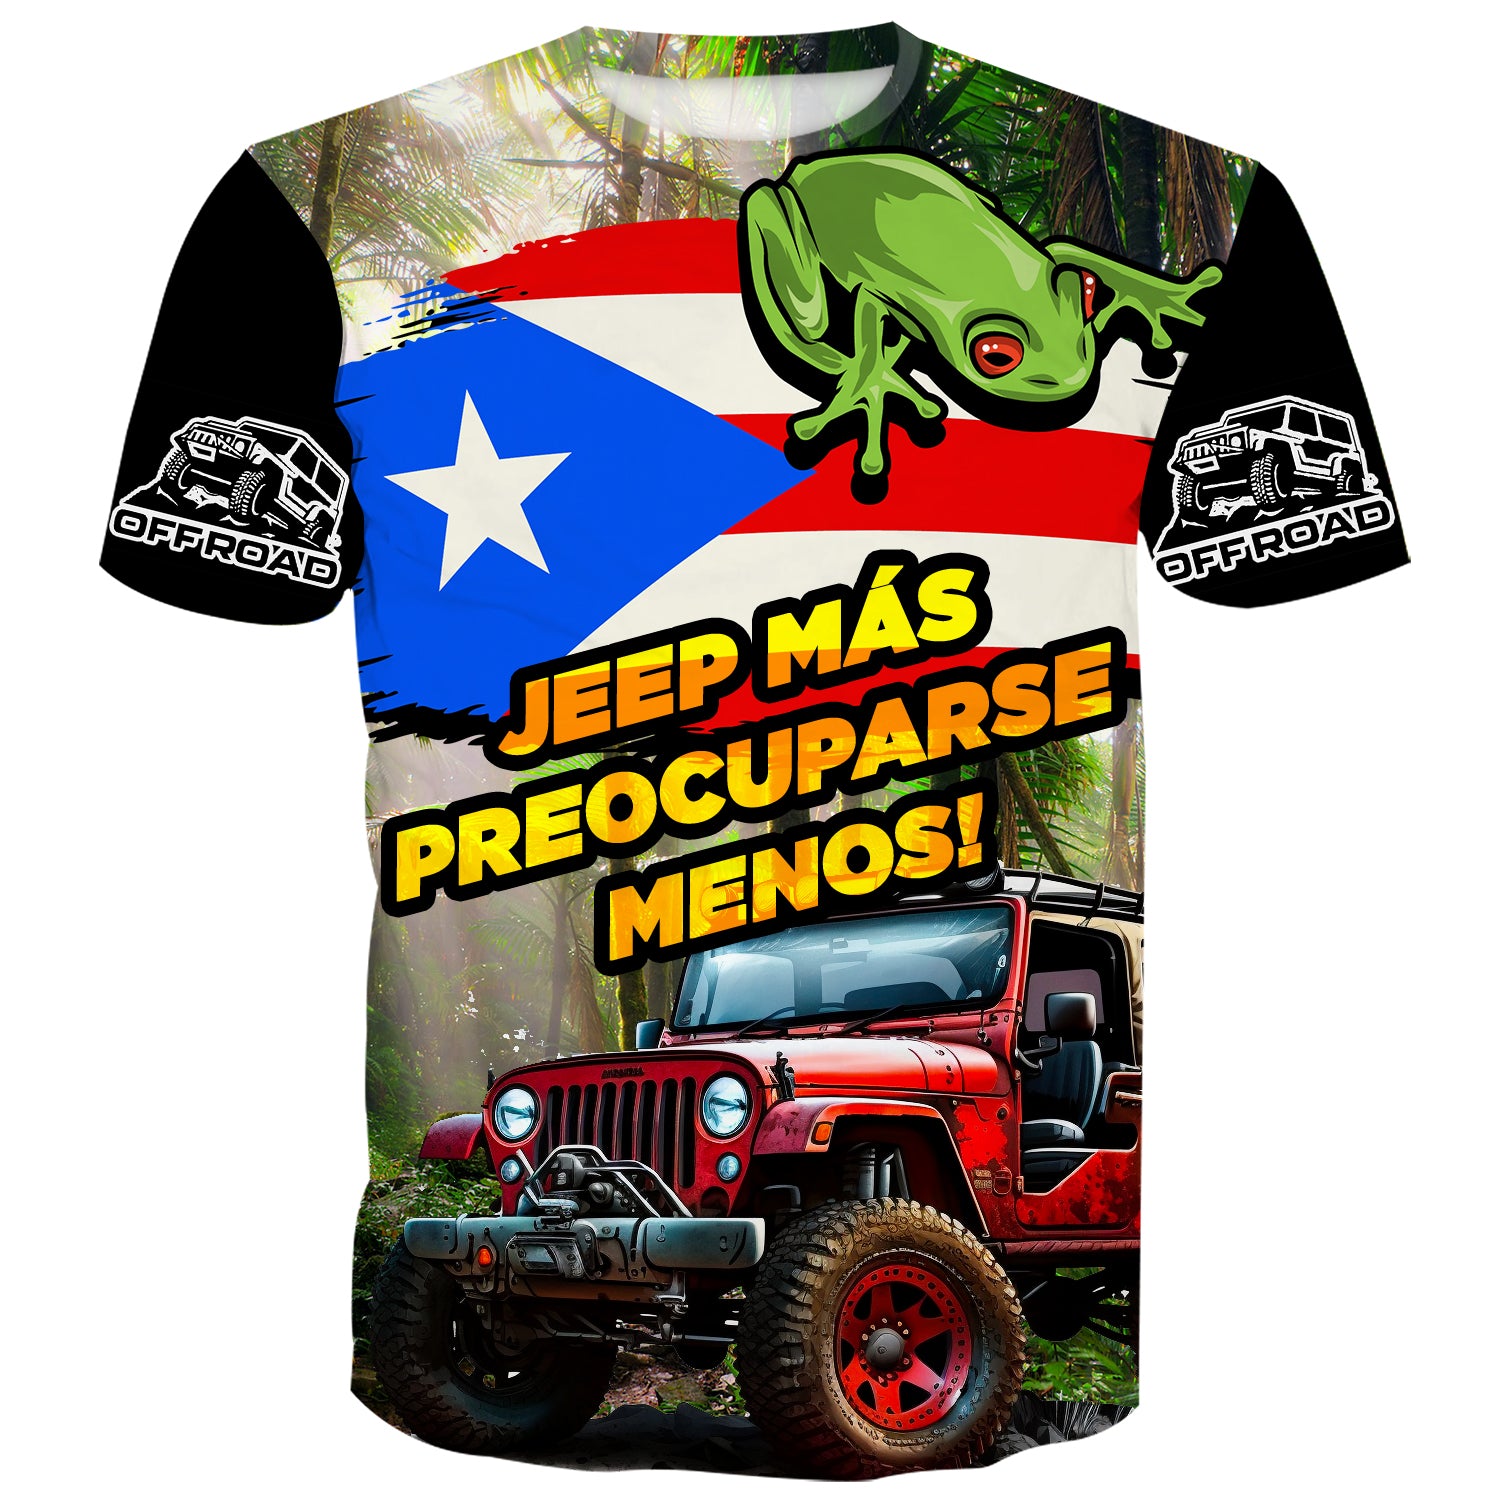 Jeep Mas Preocuparse Menos! - T-Shirt